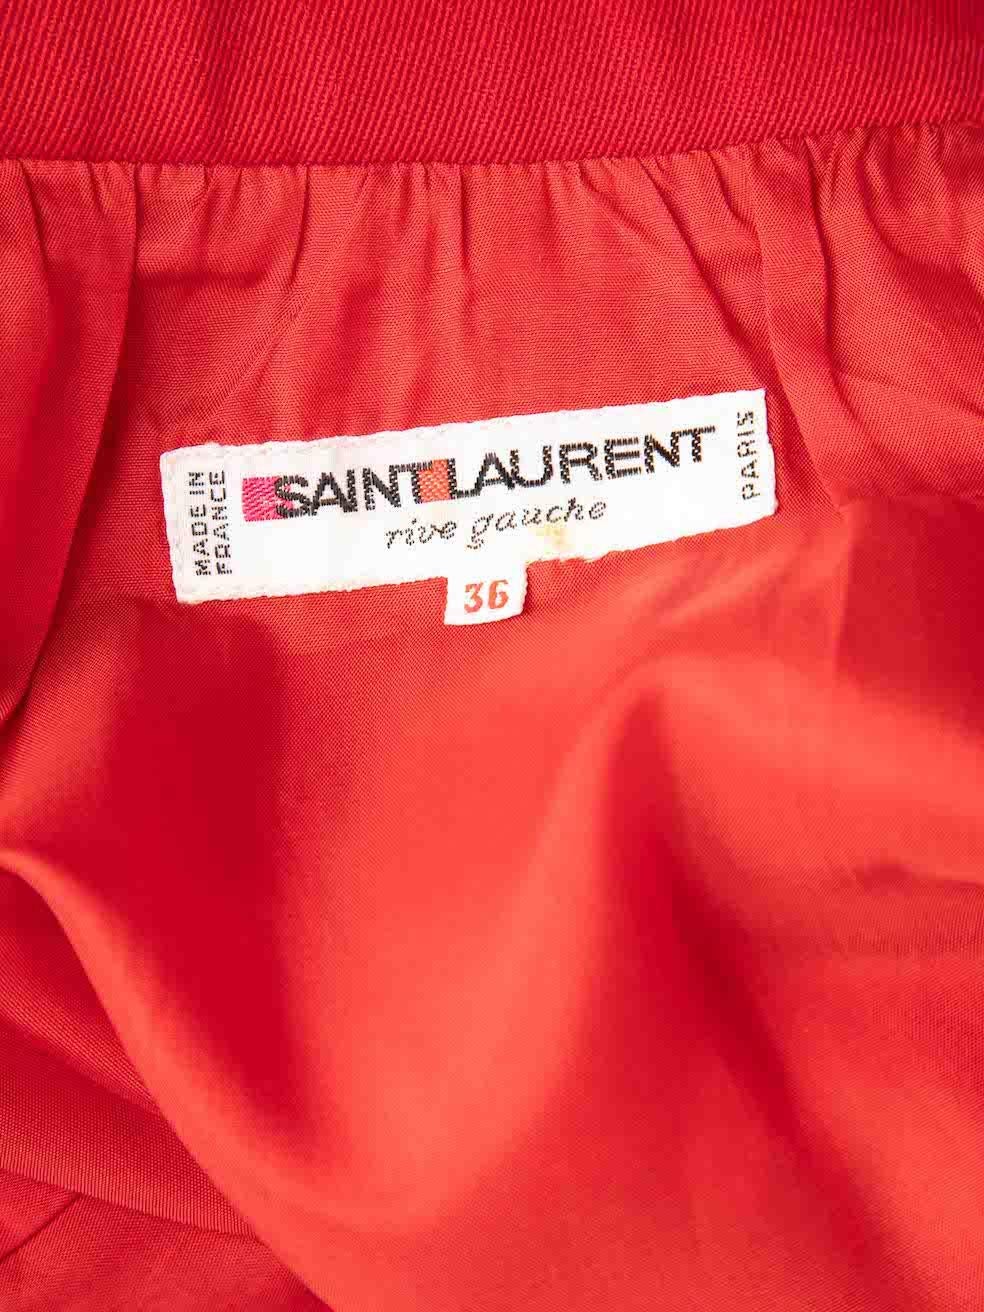 Saint Laurent Vintage Red Knee Length Pencil Skirt Size S For Sale 2